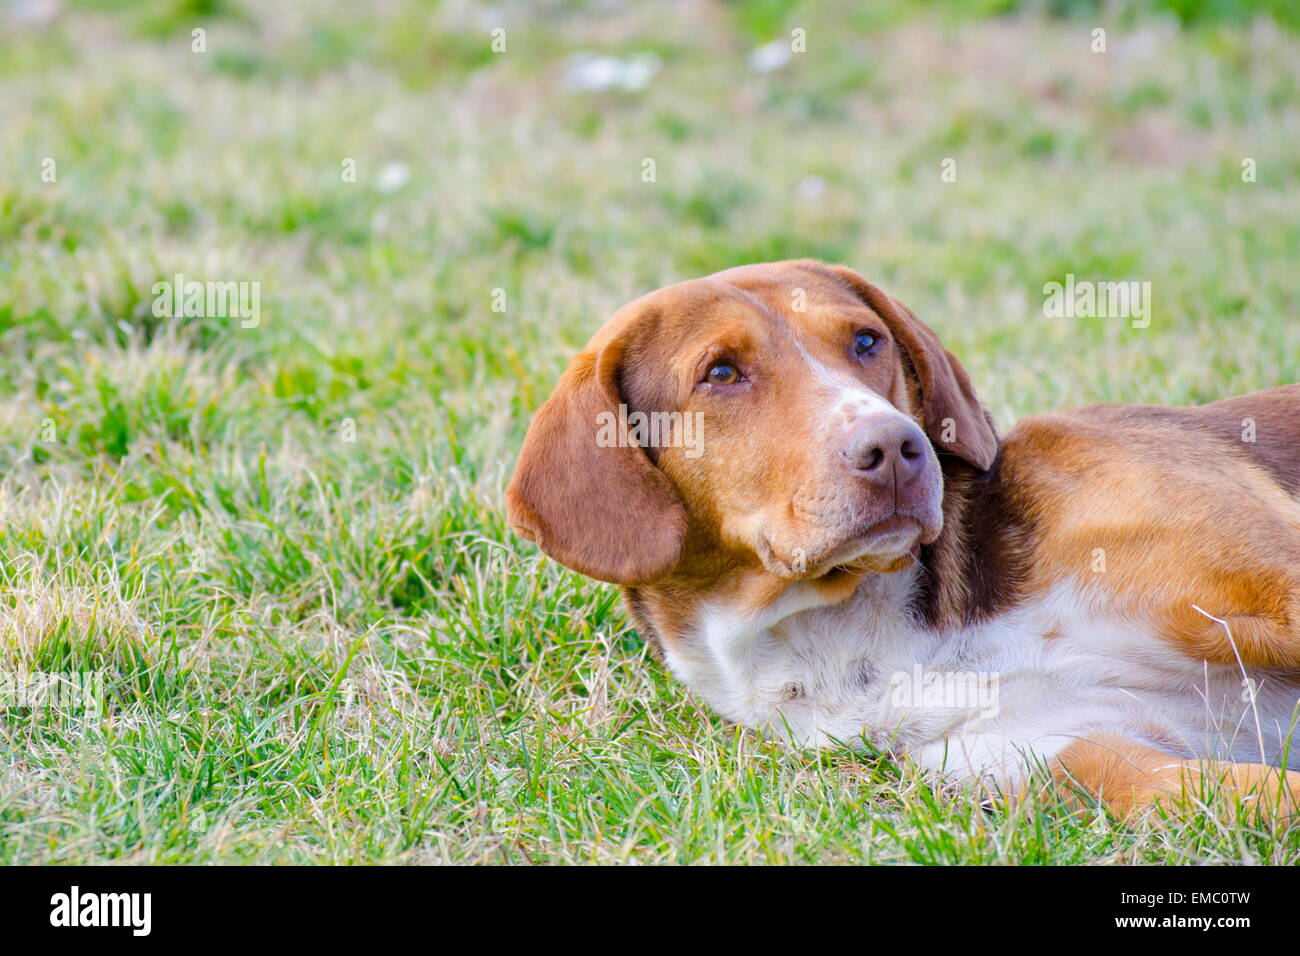 Sad old dog with orange reddish fur lying in the grass Stock Photo